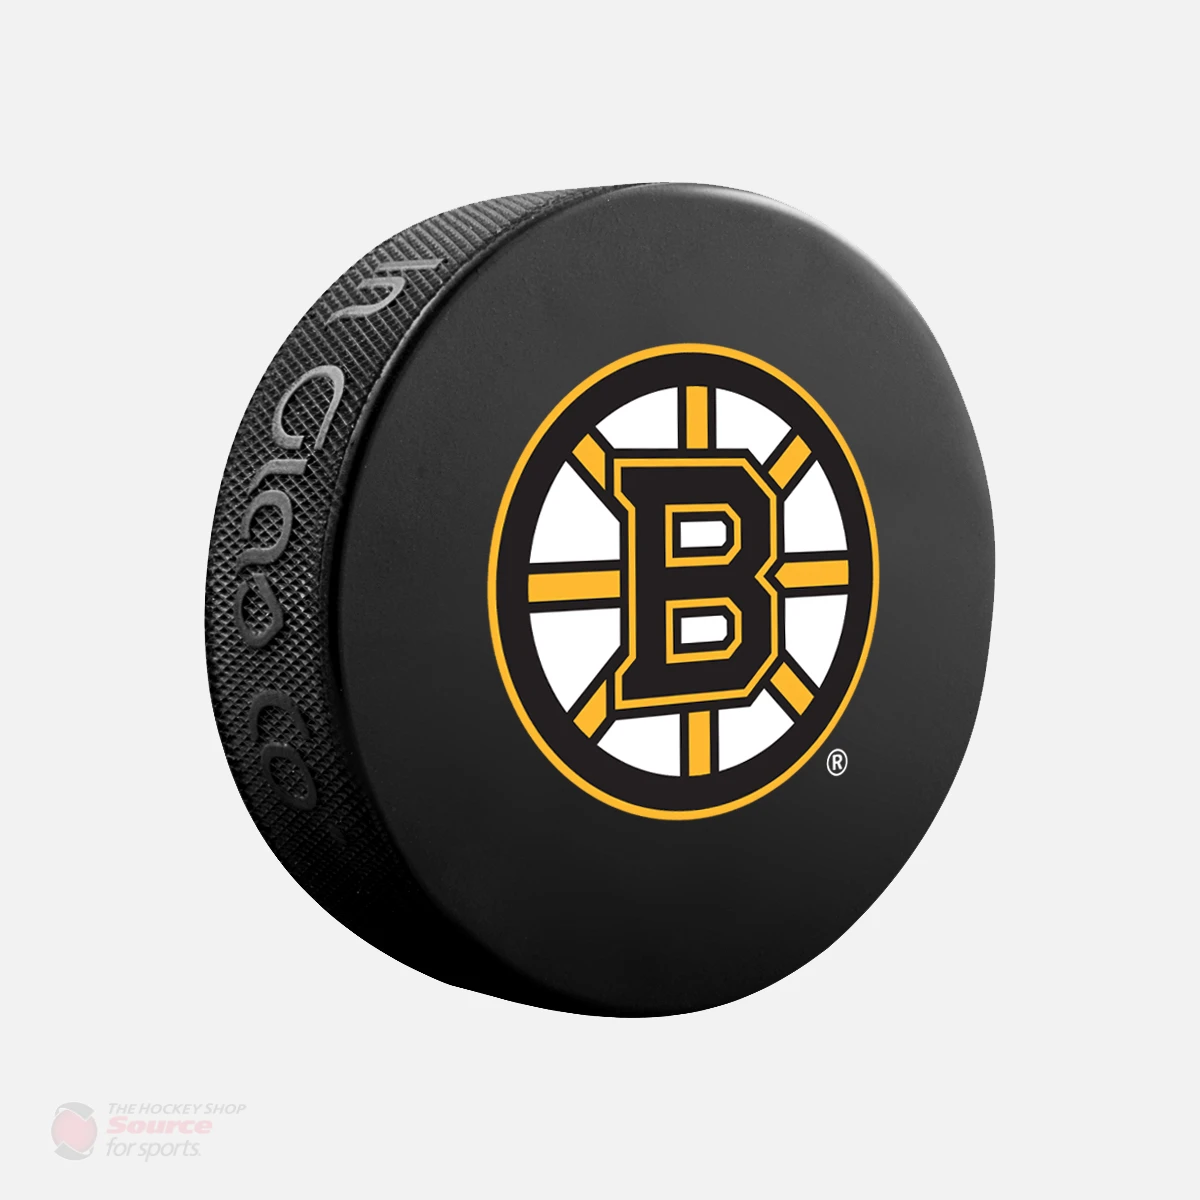 Tuukka Rask Boston Bruins Autographed Action 20x24 Number Frame